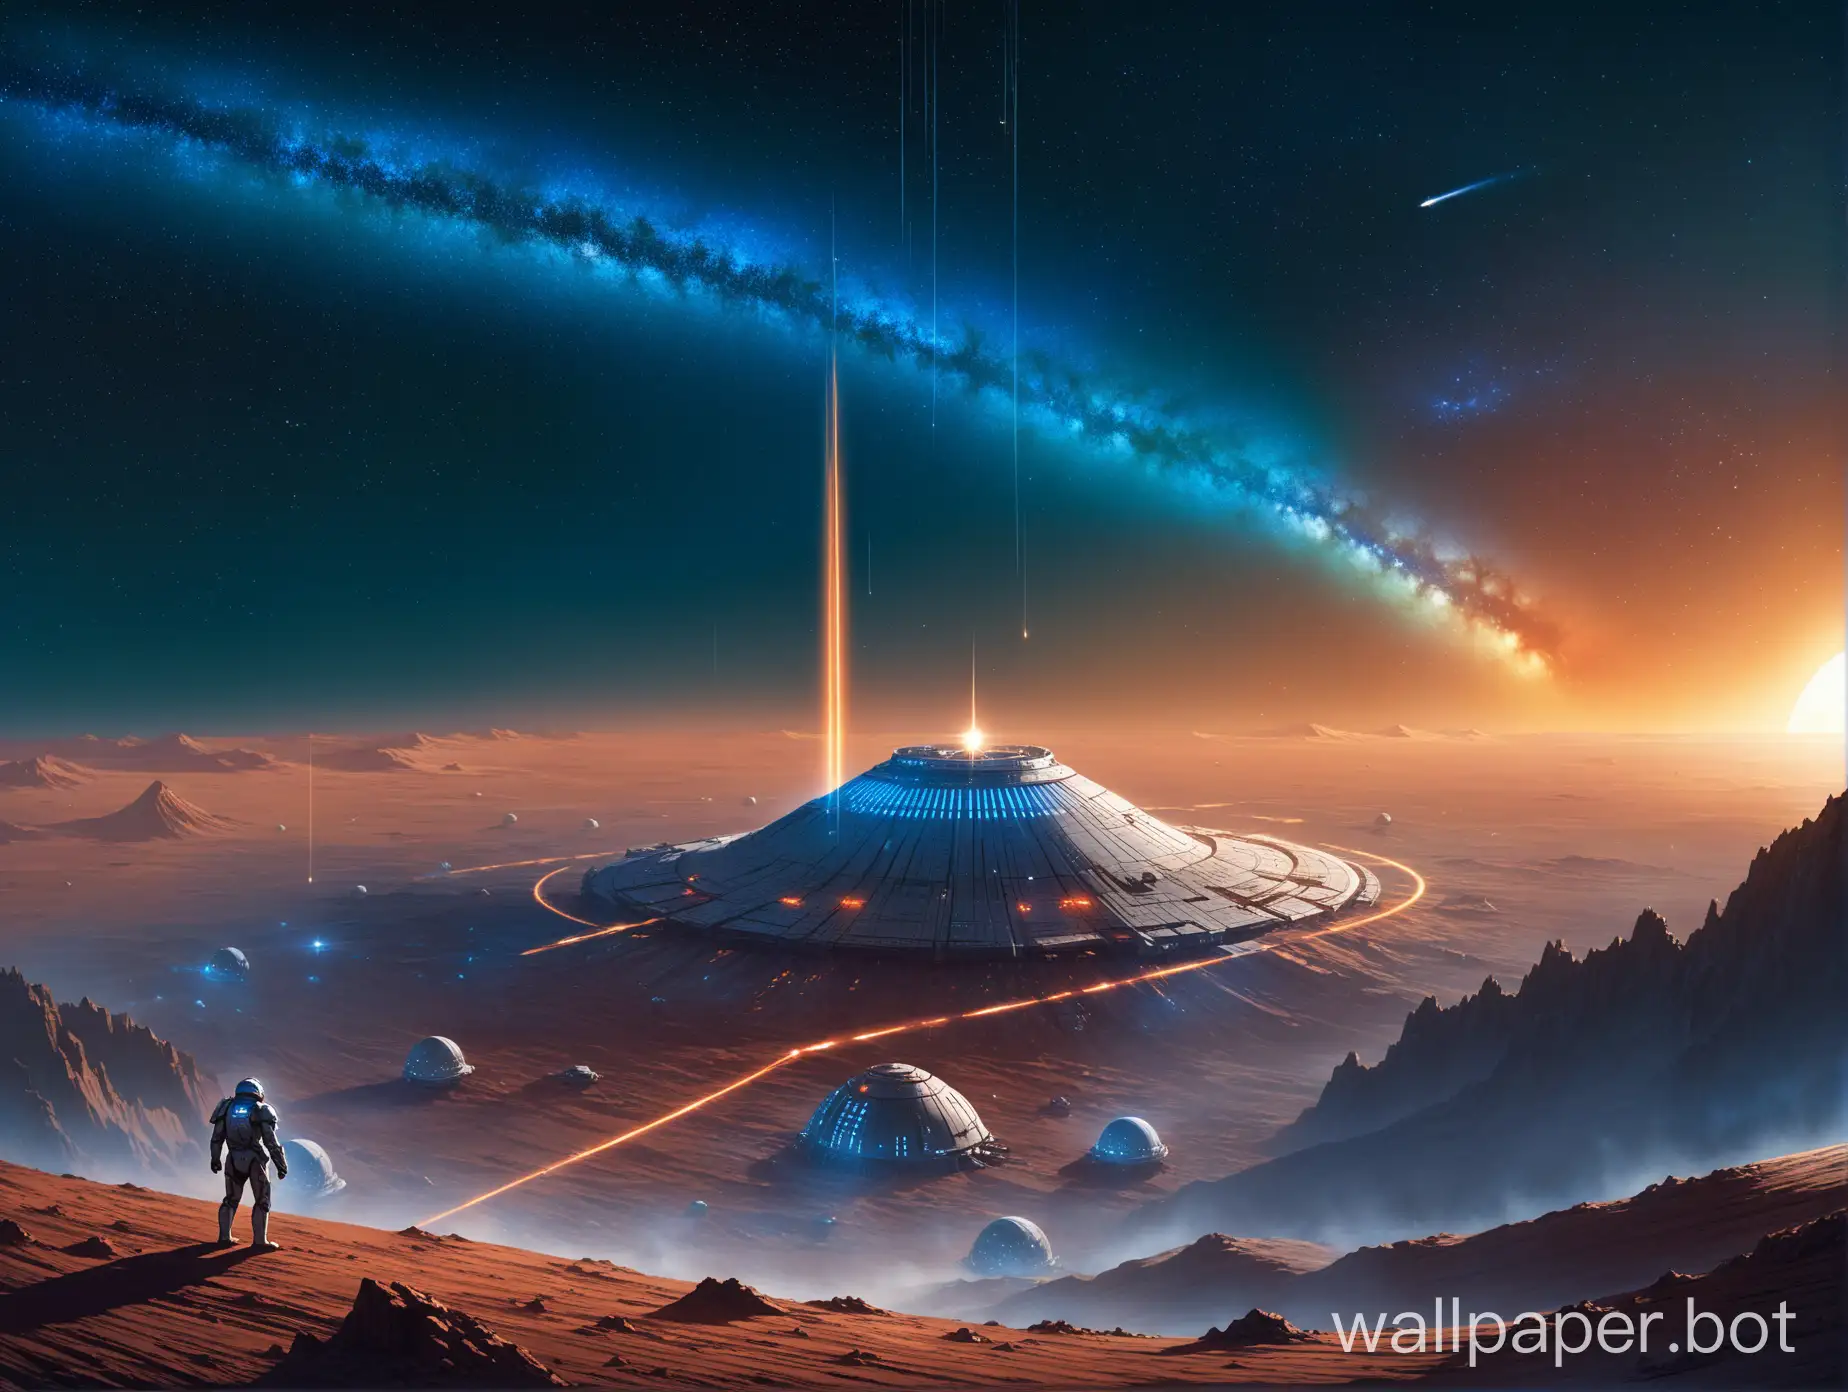 Epic-SciFi-Scene-Lone-Warrior-Amidst-Martian-Ruins-and-Interstellar-Conflict